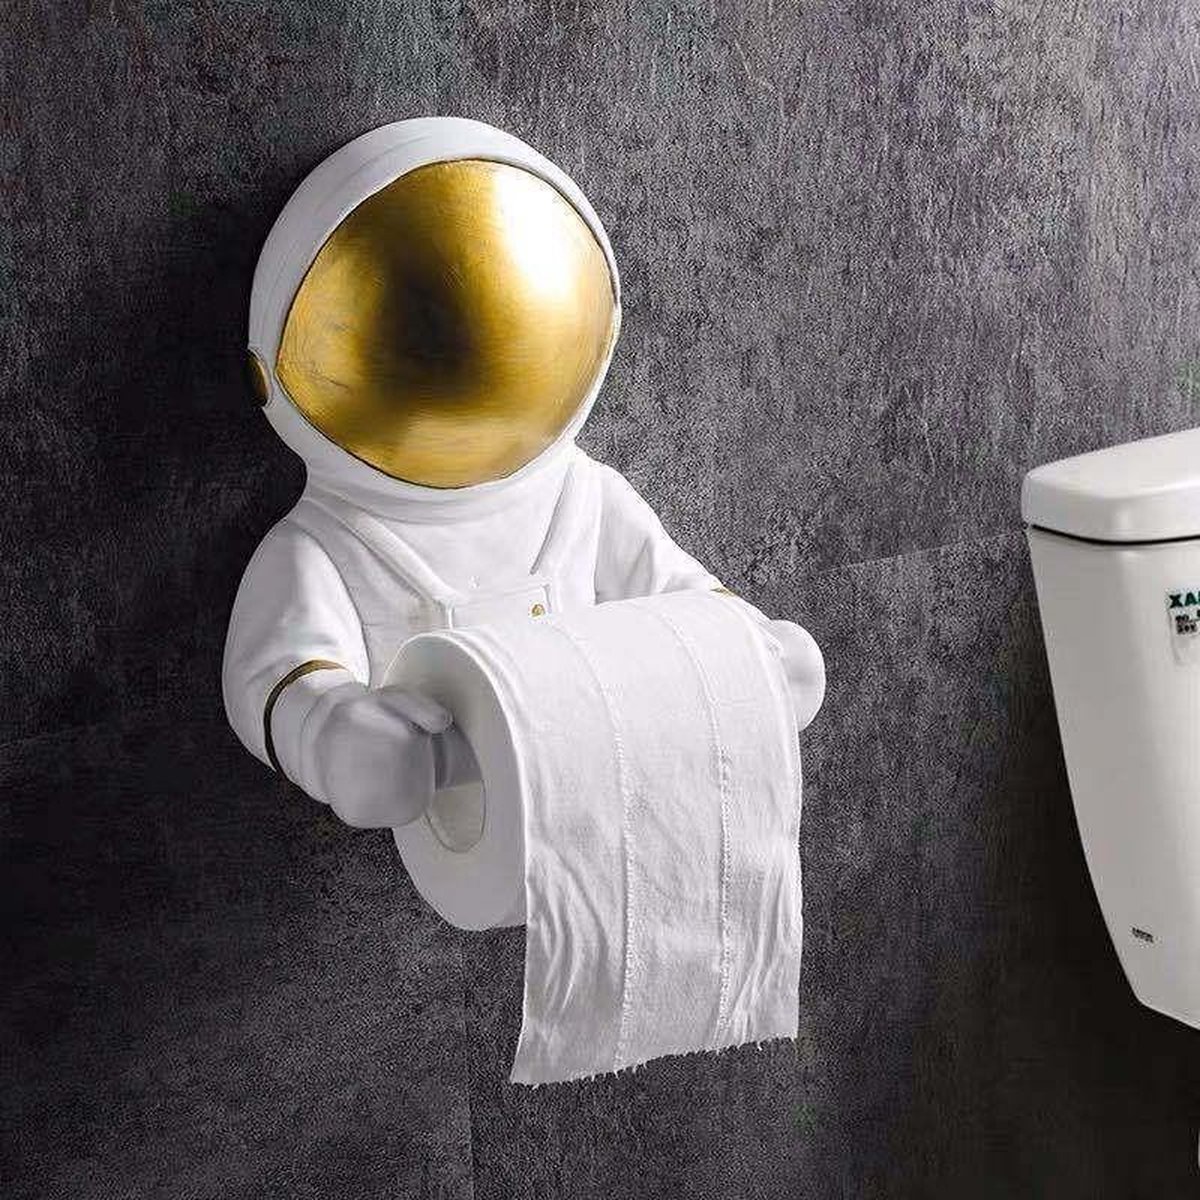 BaykaDecor - Unieke Toiletrol Houder - Astronaut - Badkamer en Toiletdecoratie - Muurbevestiging - Wc-rol Houder - Wit Goud 20 cm